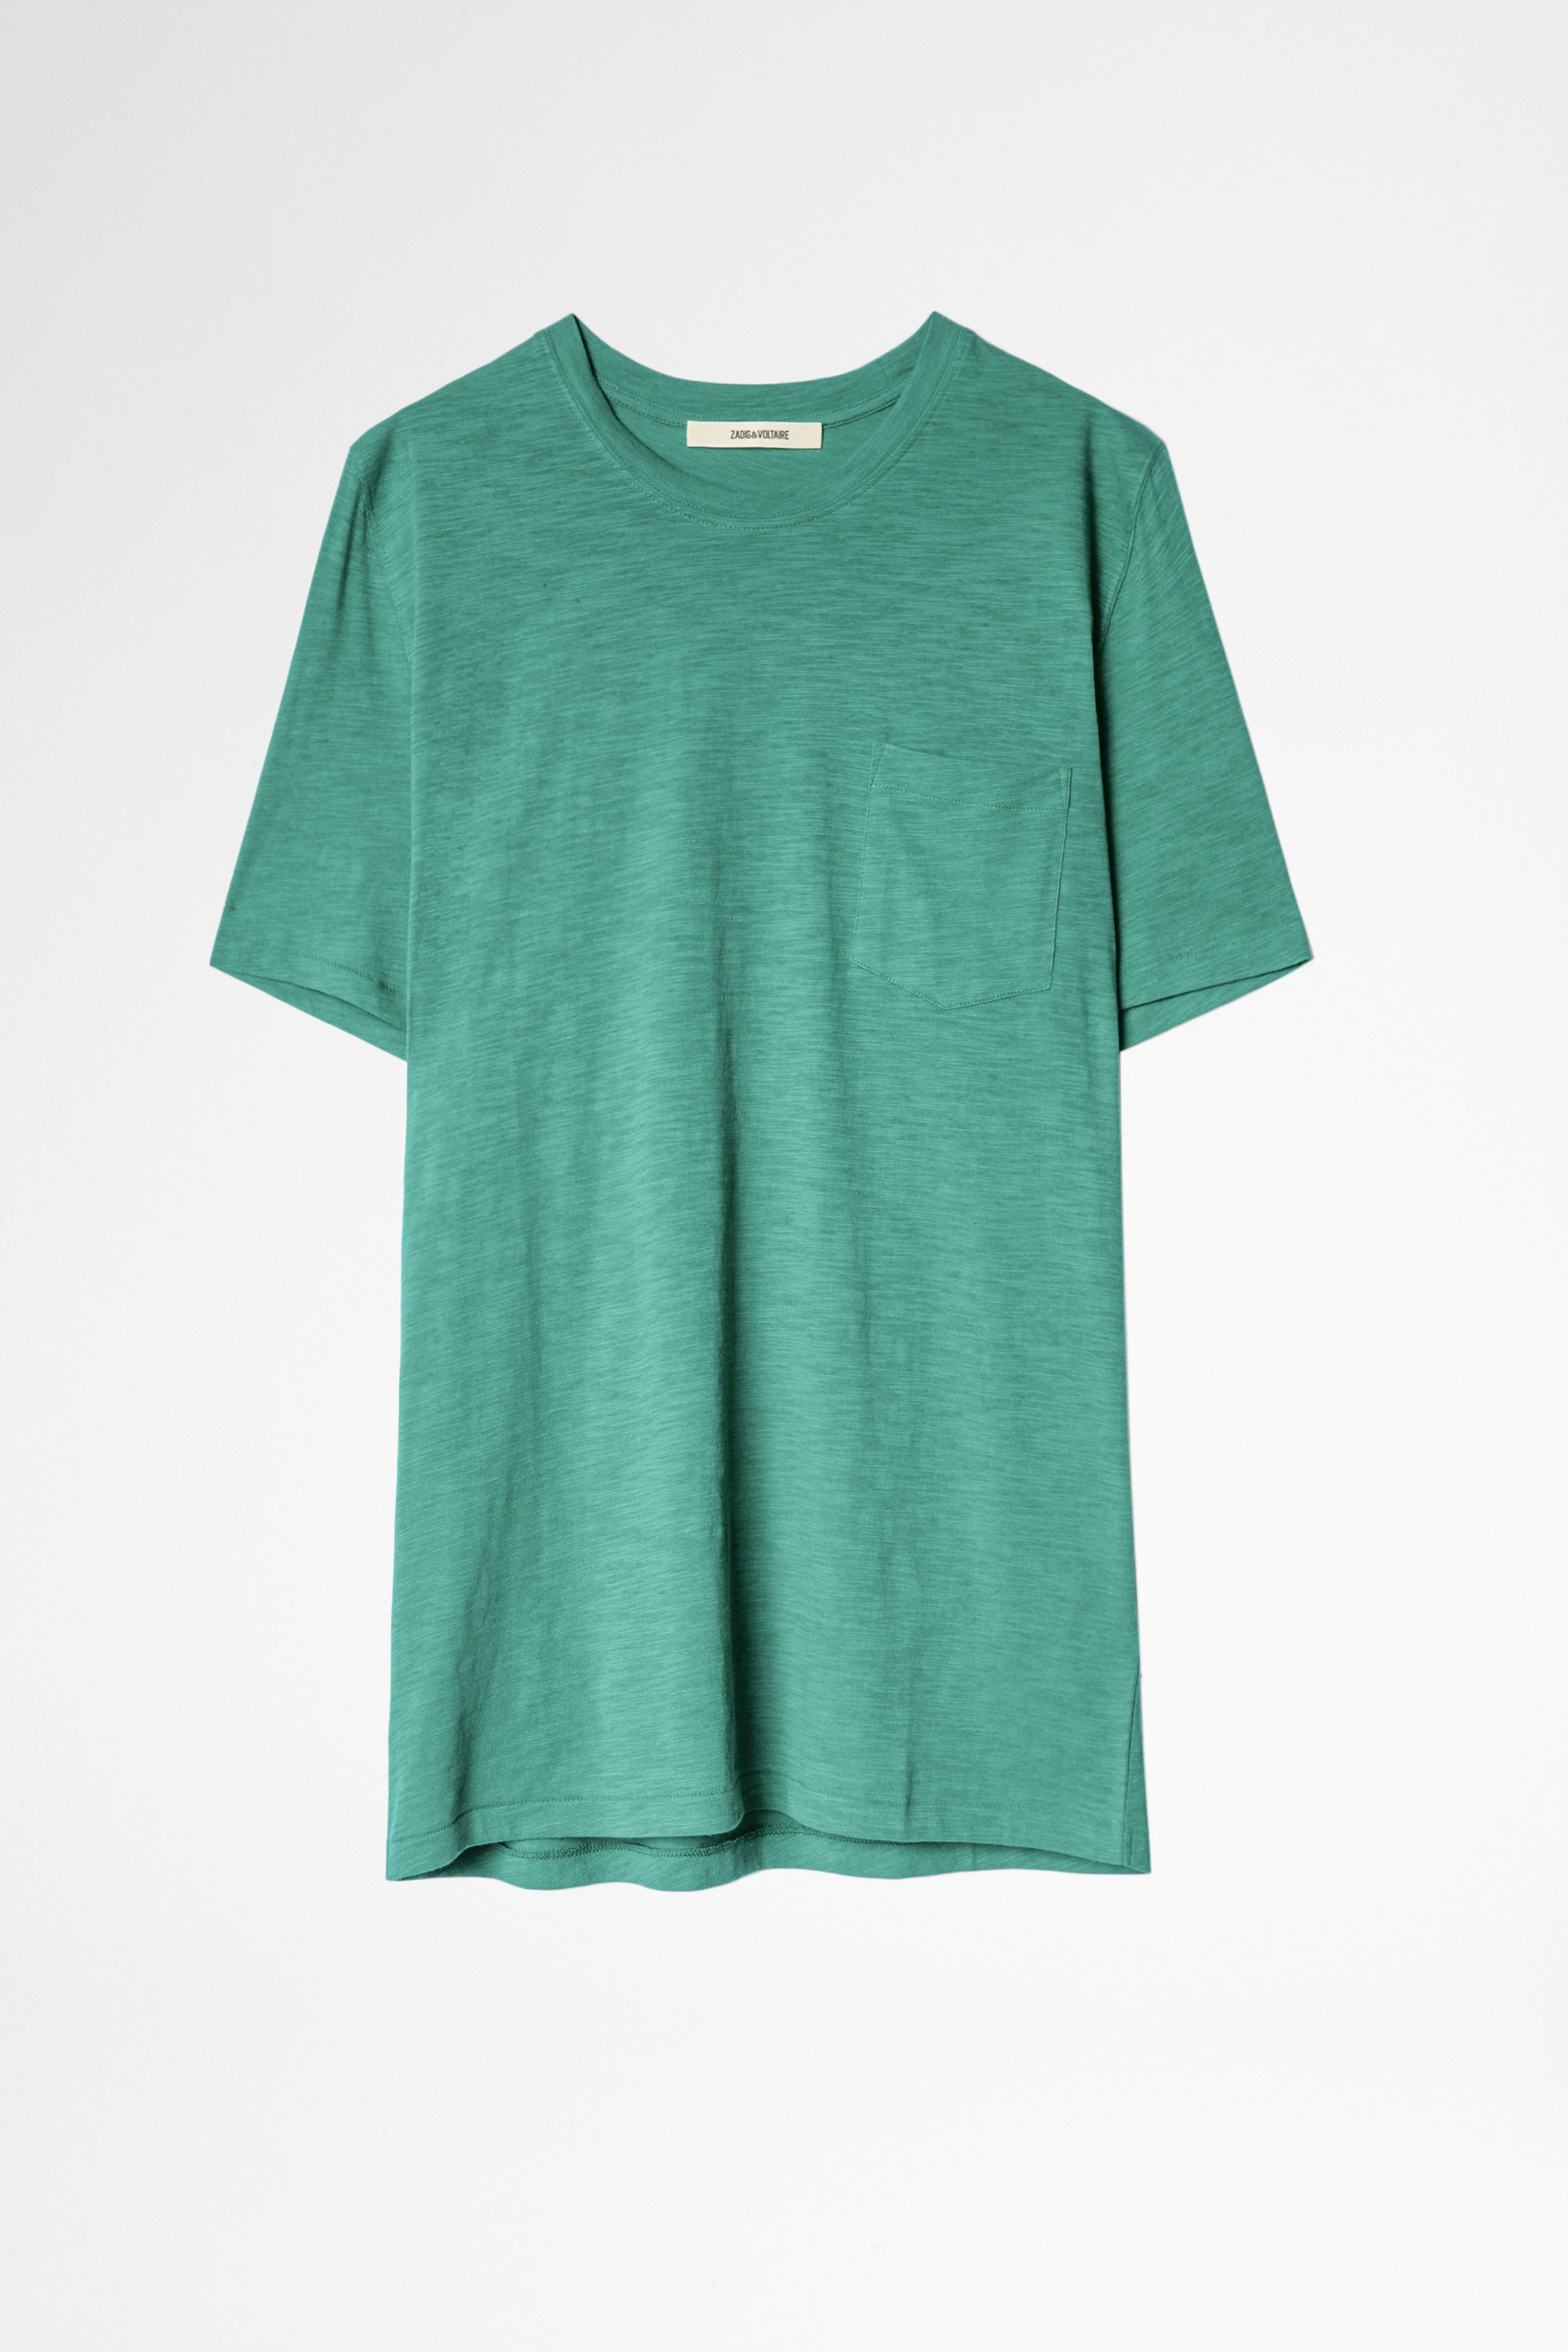 T-Shirt Stockholm Flamme Damen-T-Shirt aus smaragdgrüner Baumwolle.